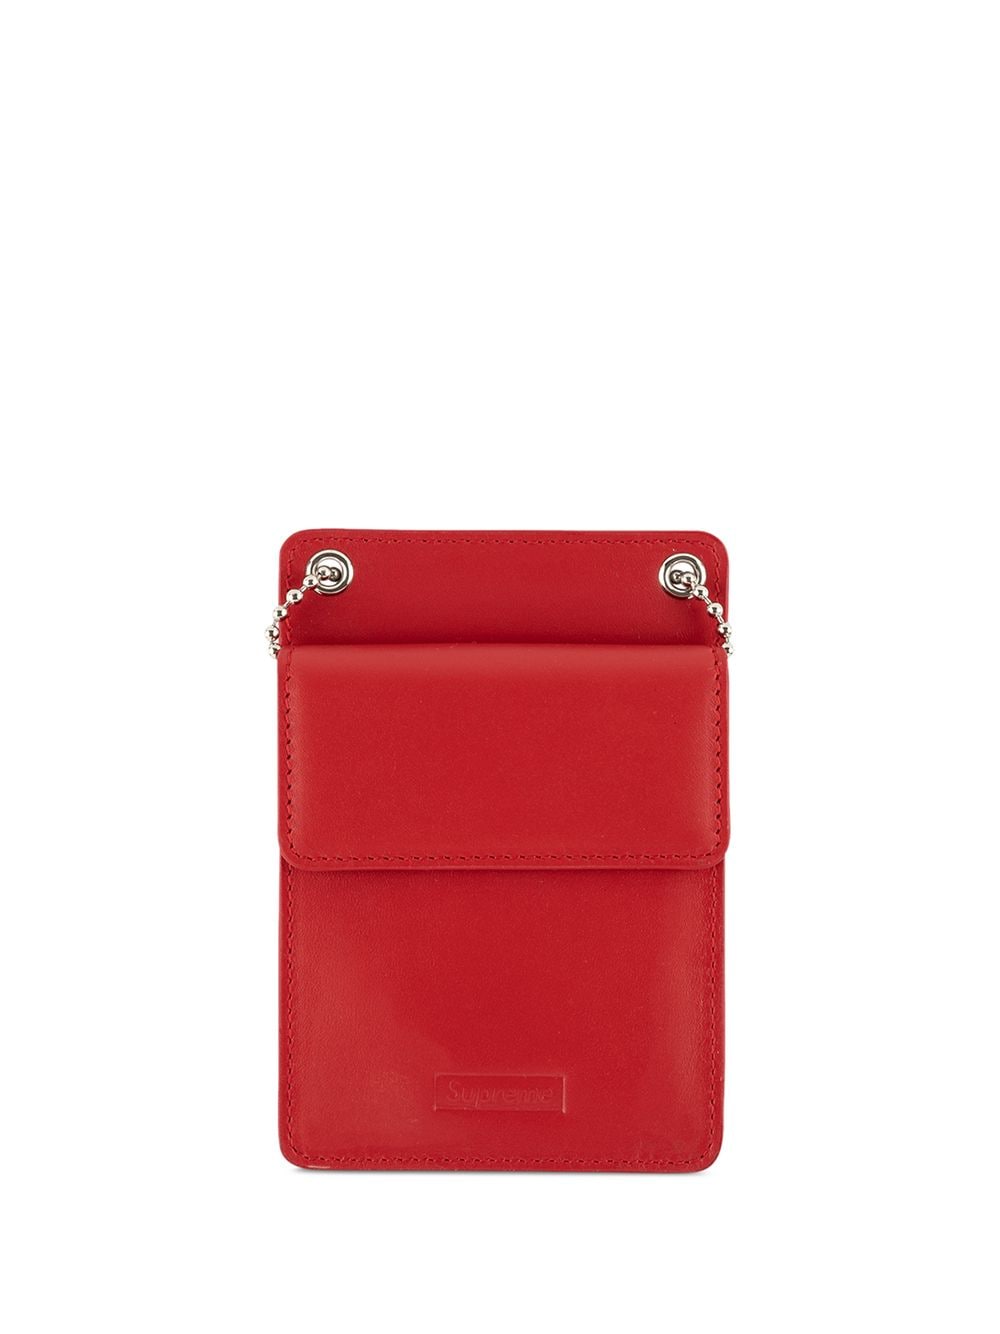 Supreme Leather ID Holder - Red von Supreme